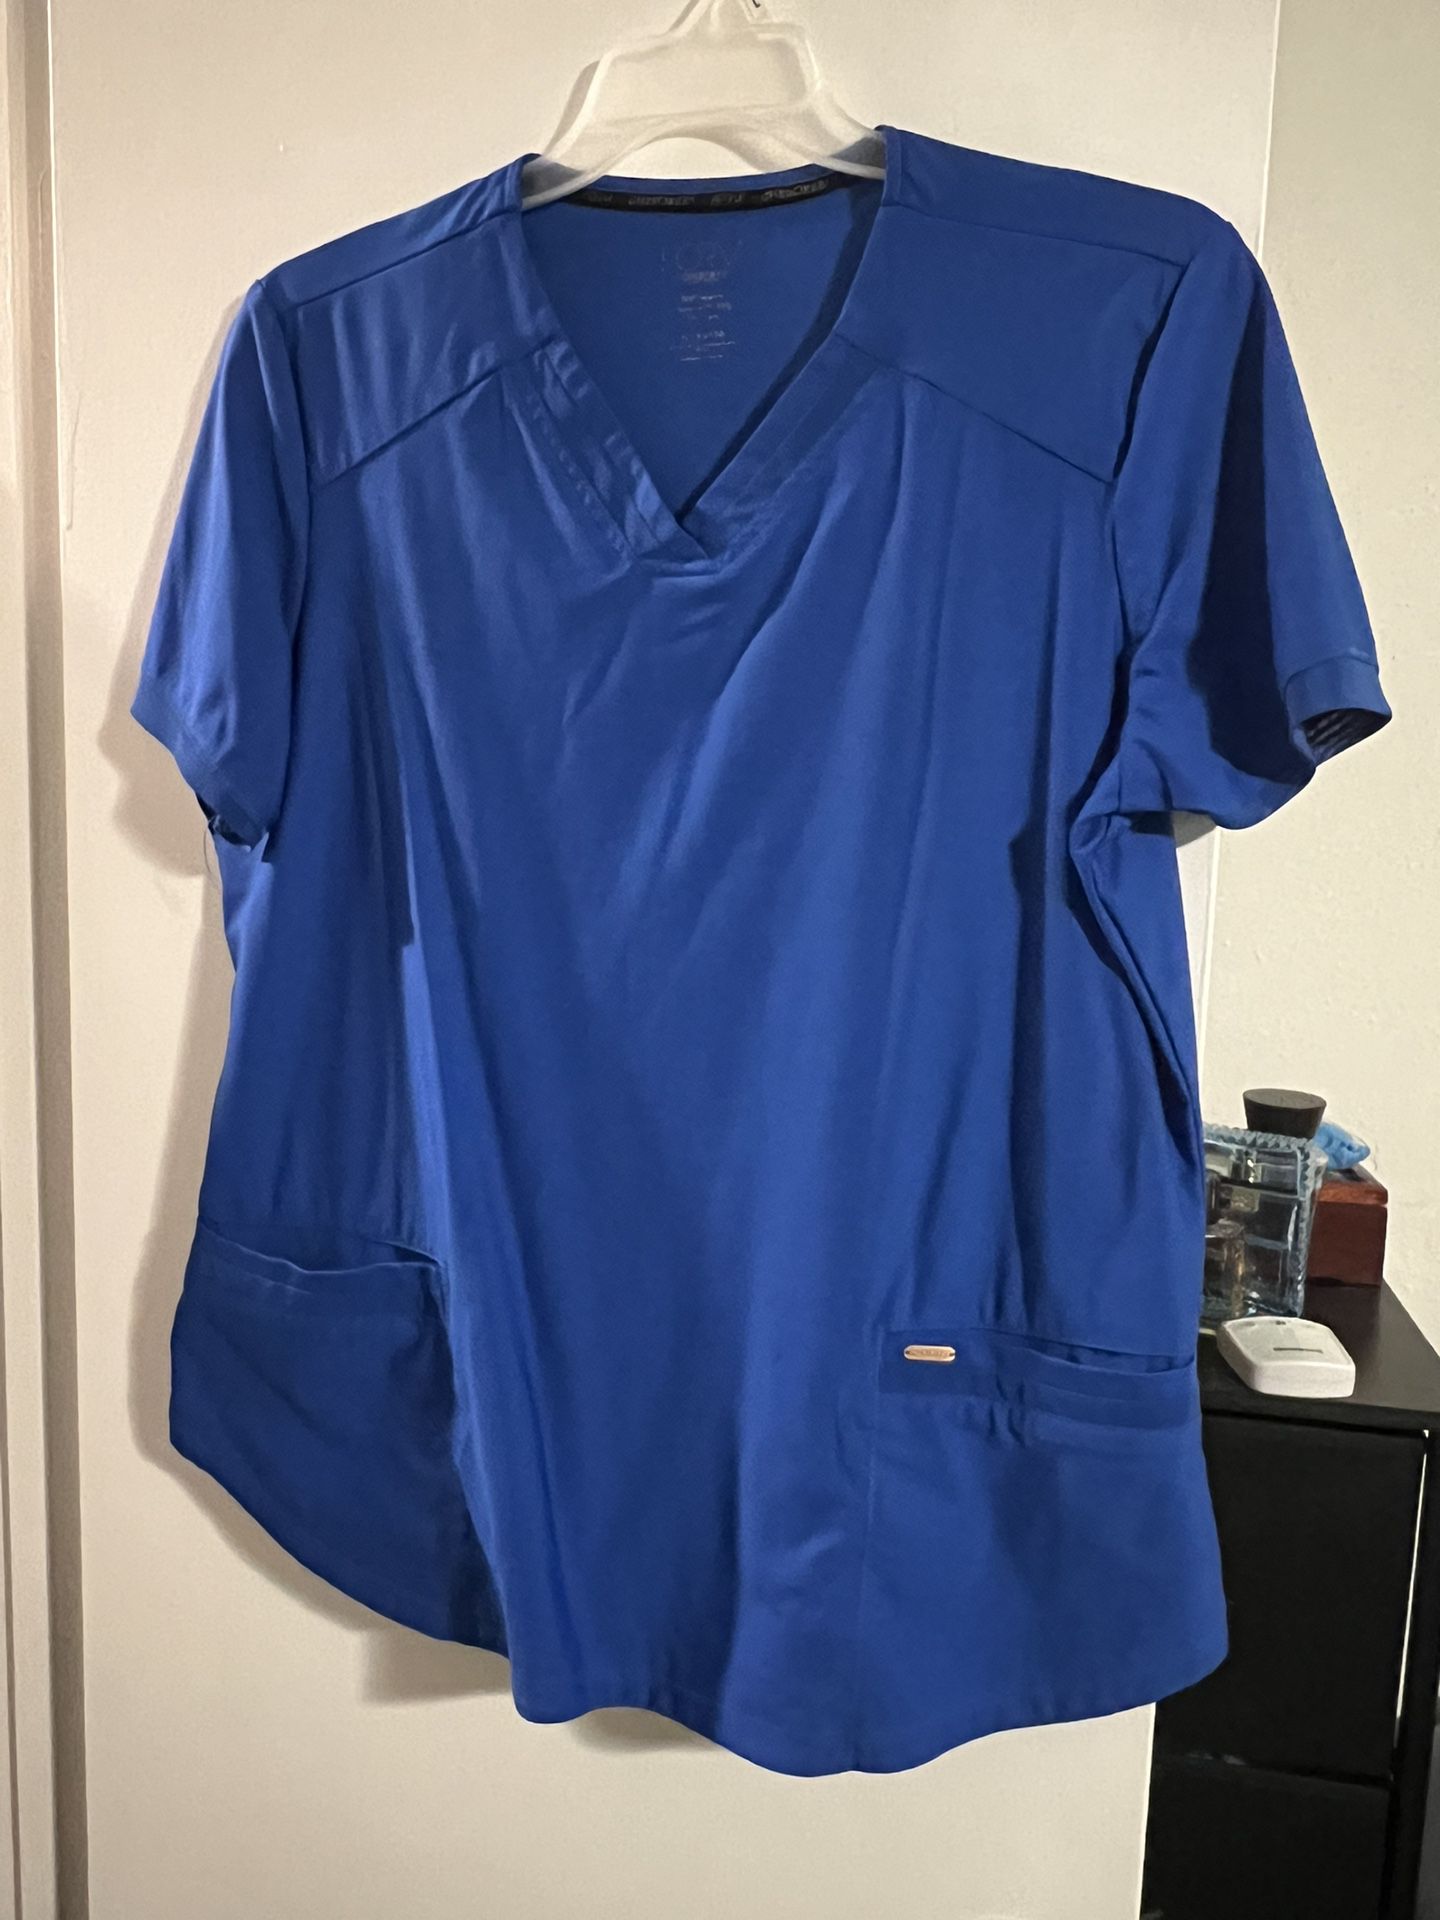 XL Royal Blue Scrubs for Sale in San Antonio, TX - OfferUp